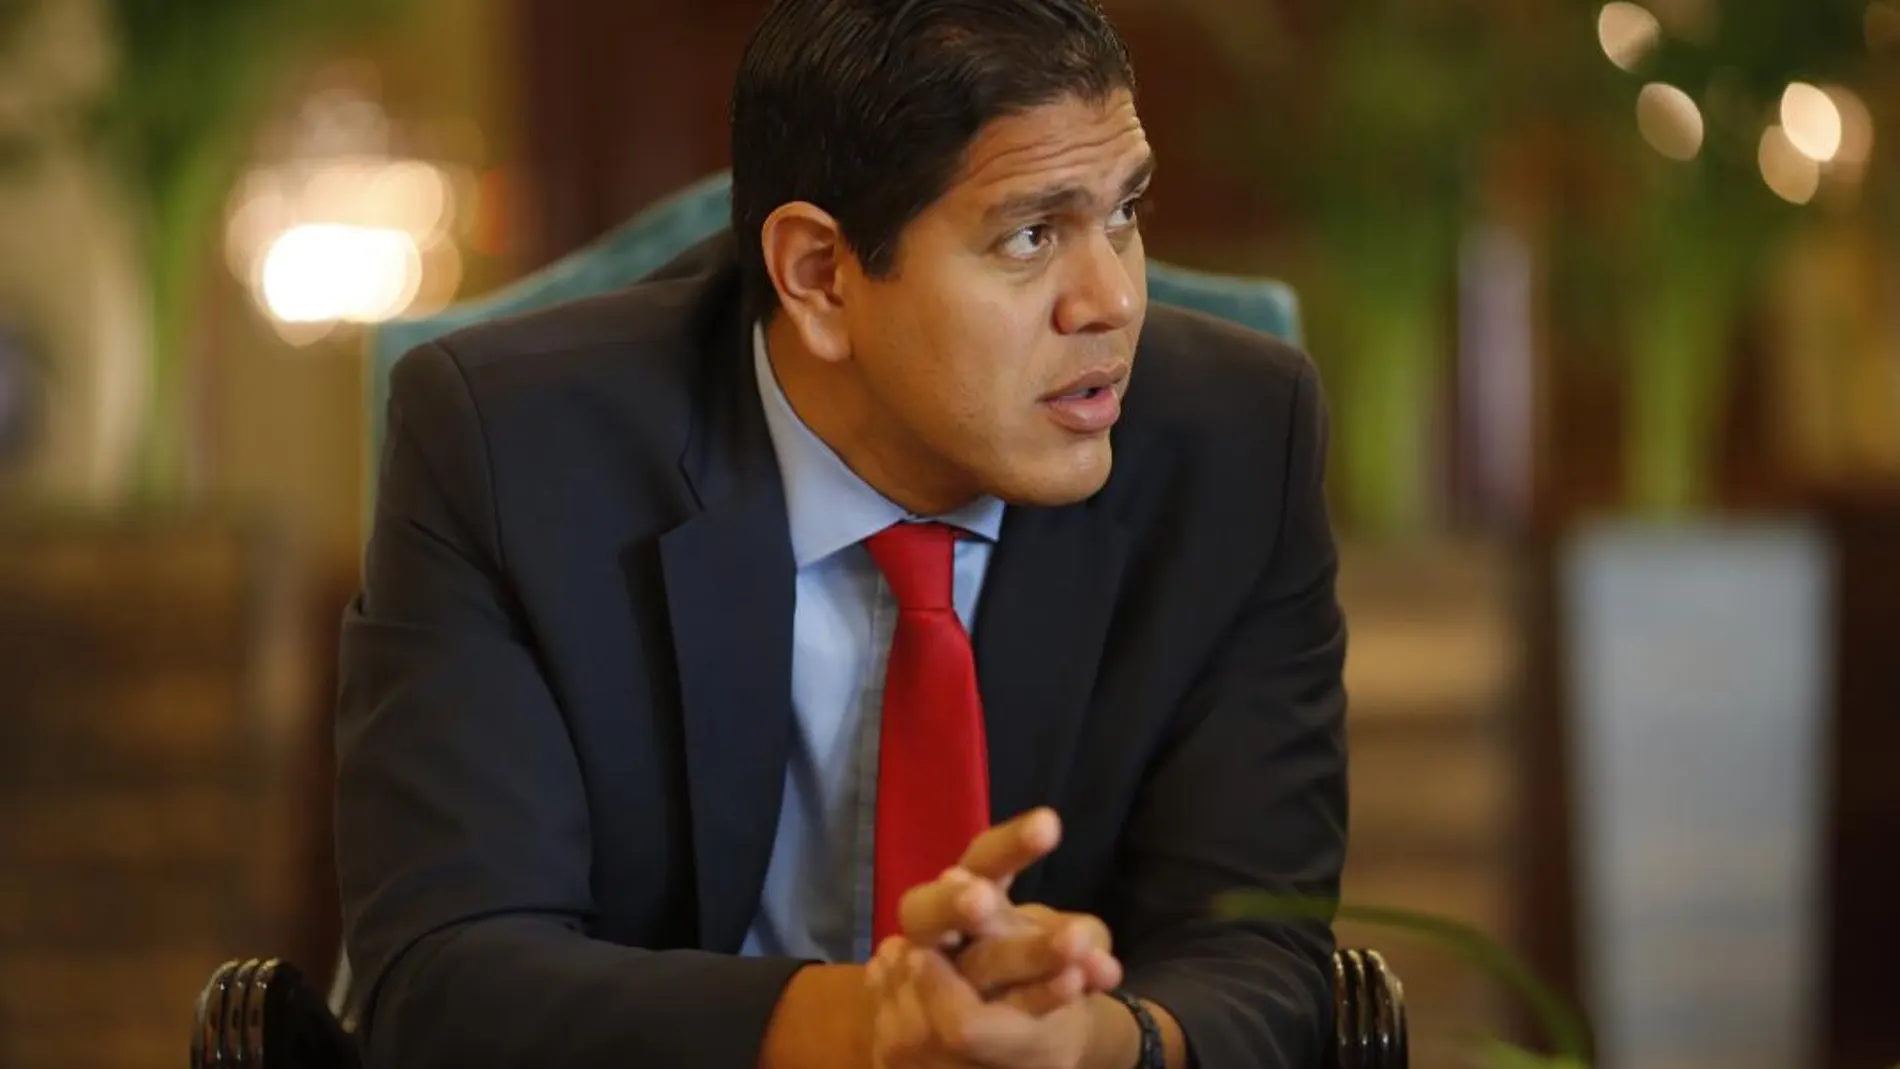 Lester Toledo, diputado opositor de Venezuela